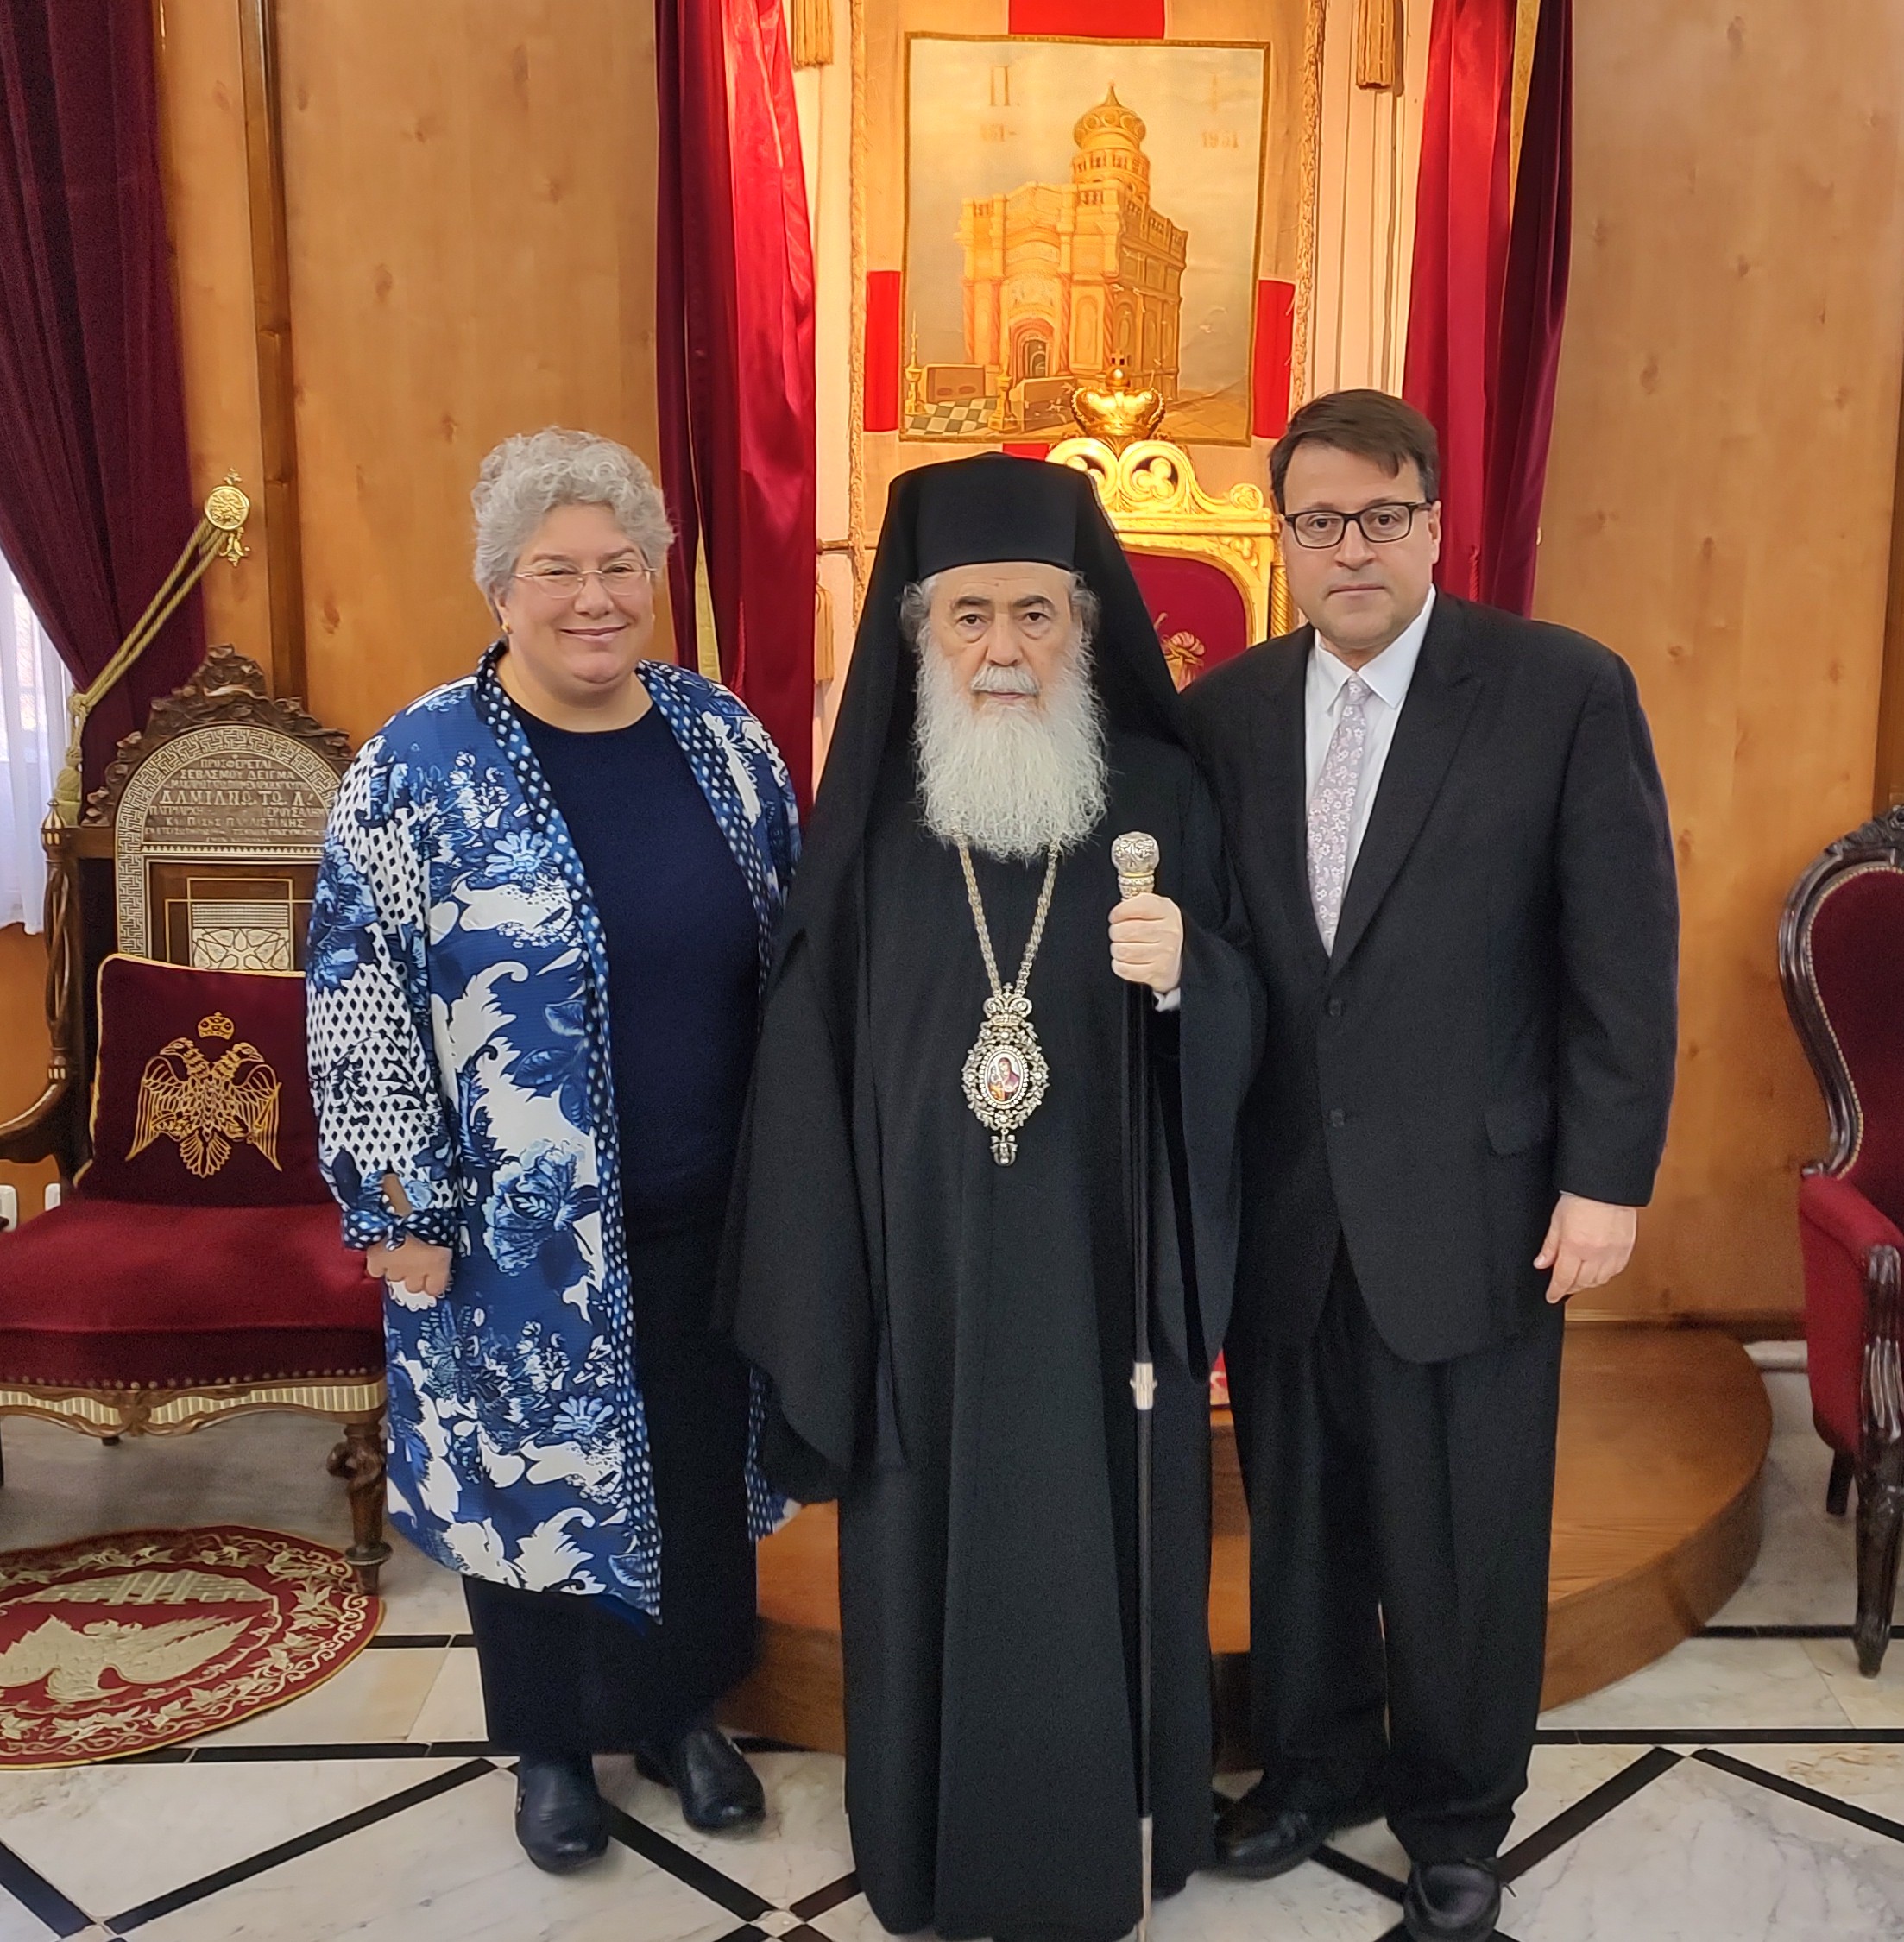 OCP@15: His Beatitude Patriarch Theophilos III of Jerusalem Received OCP Chairman